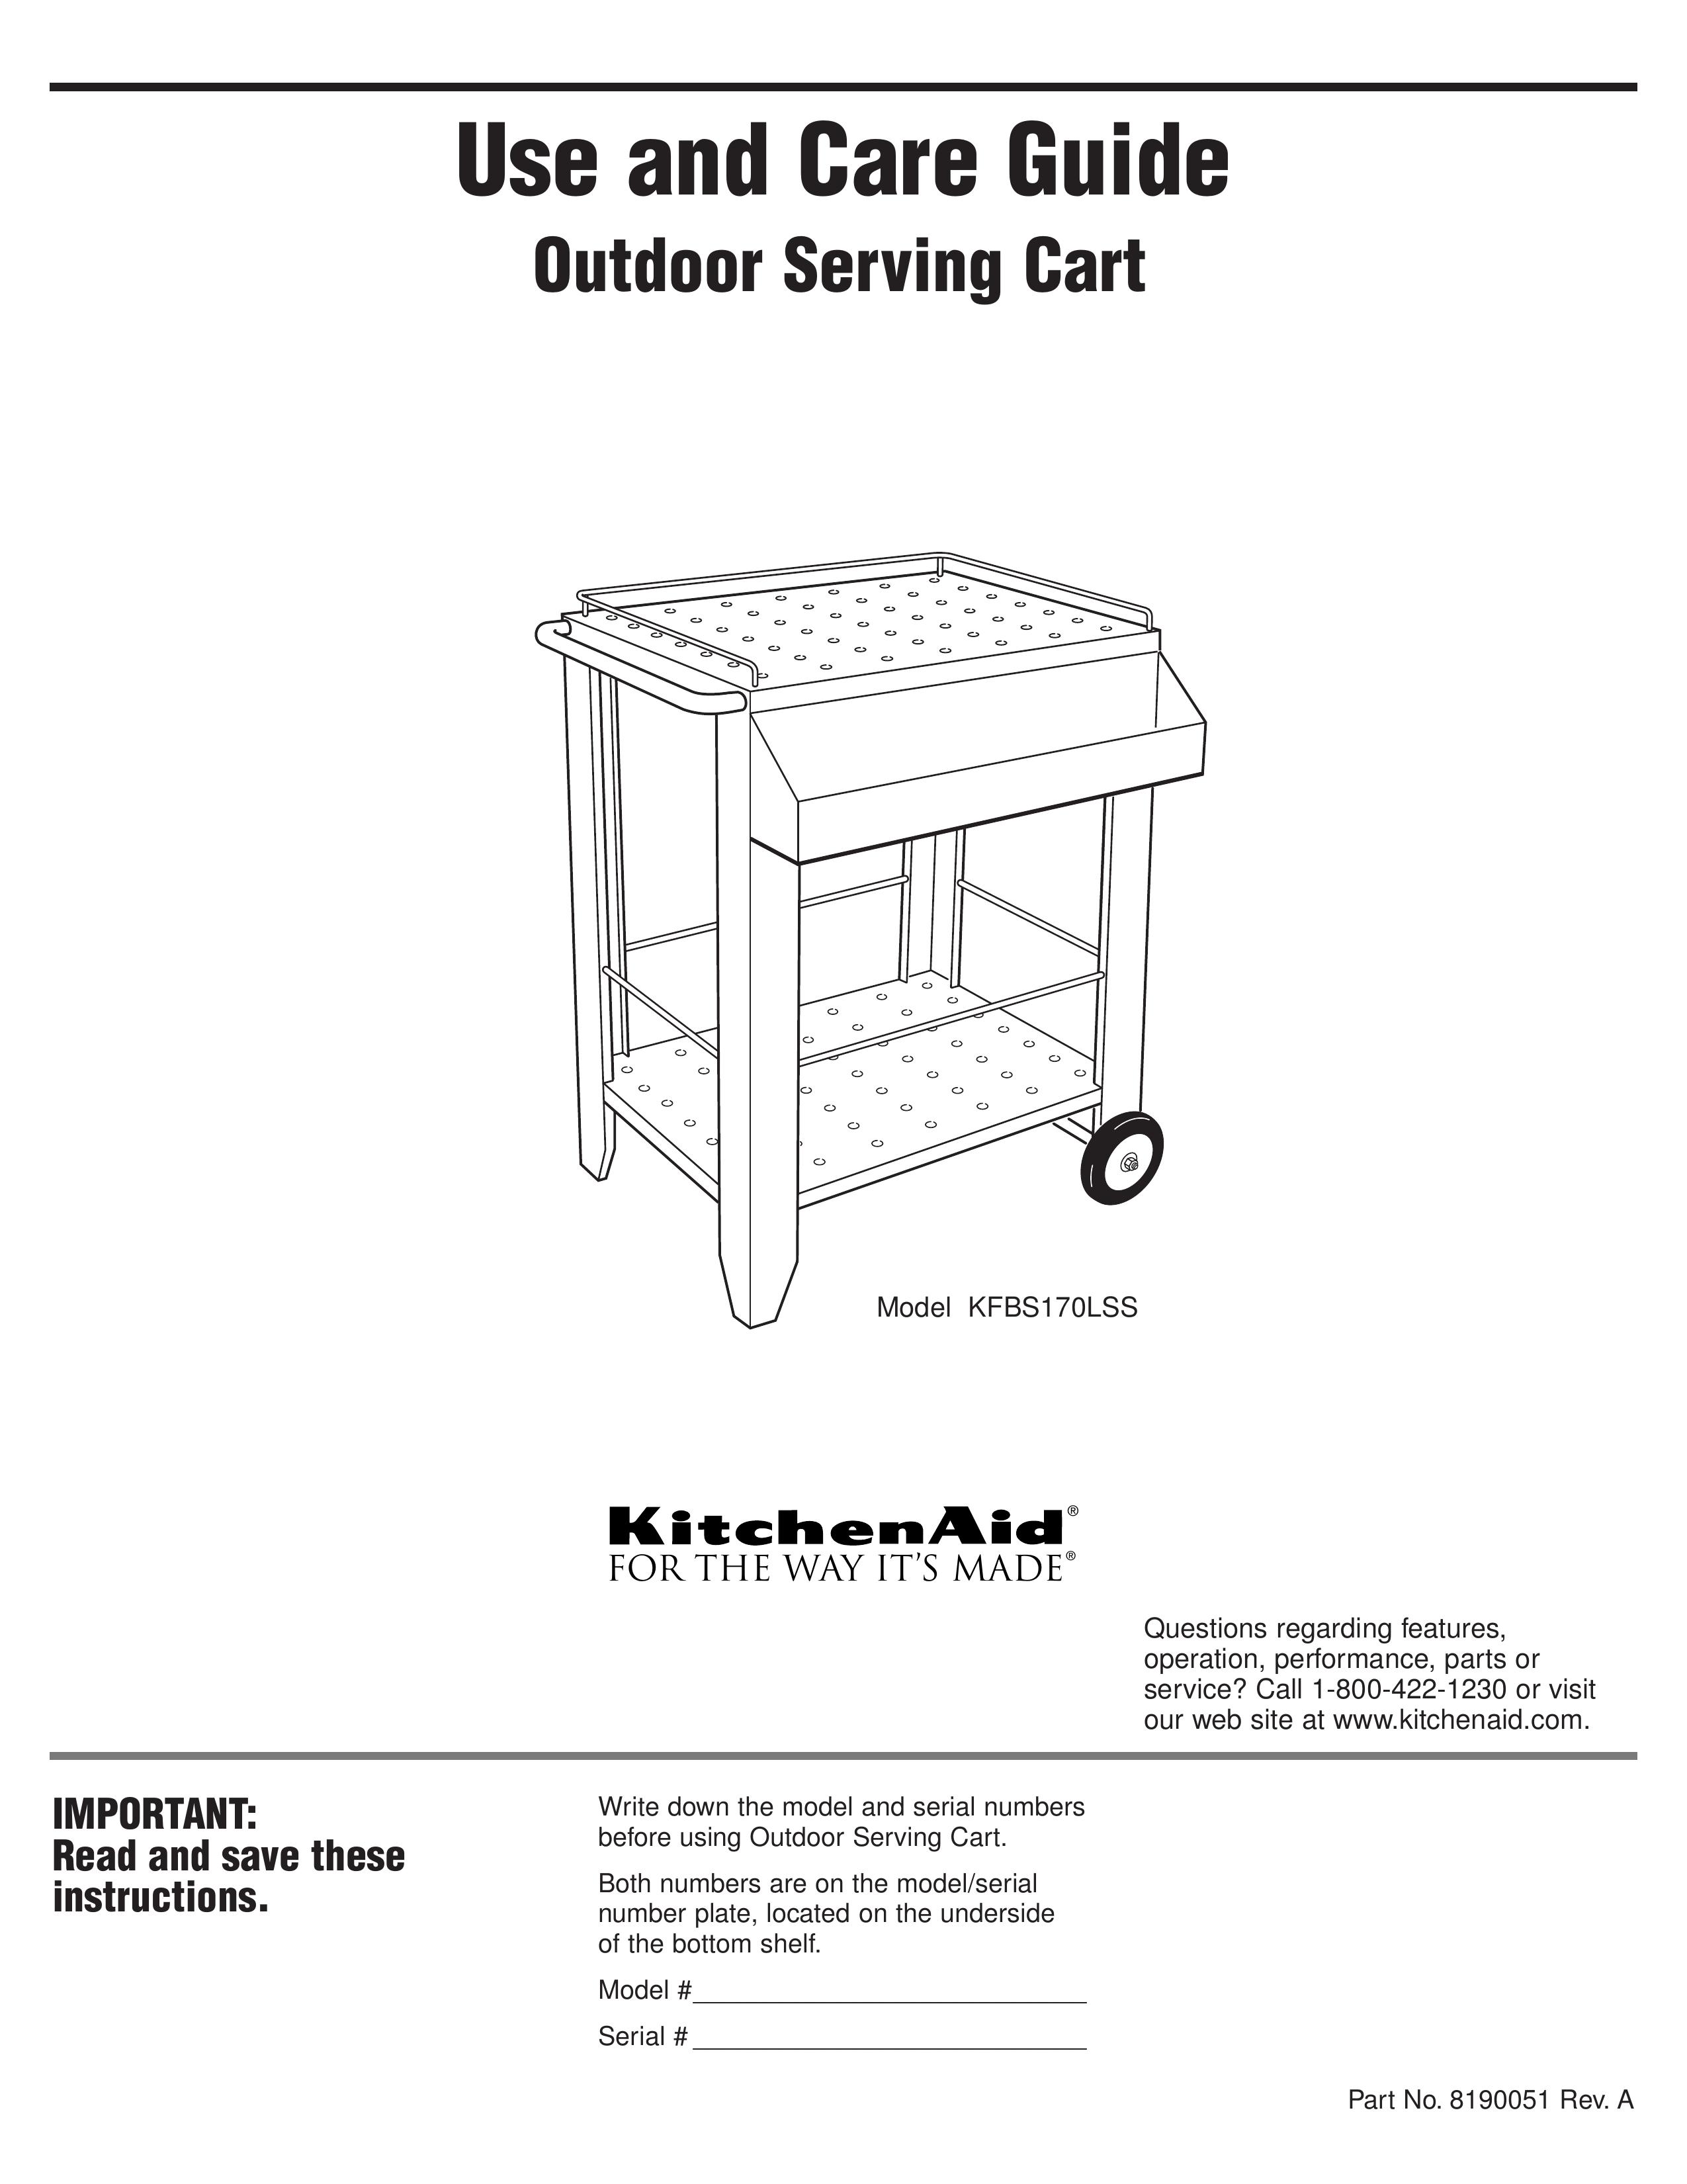 KitchenAid KFBS170LSS Outdoor Cart User Manual